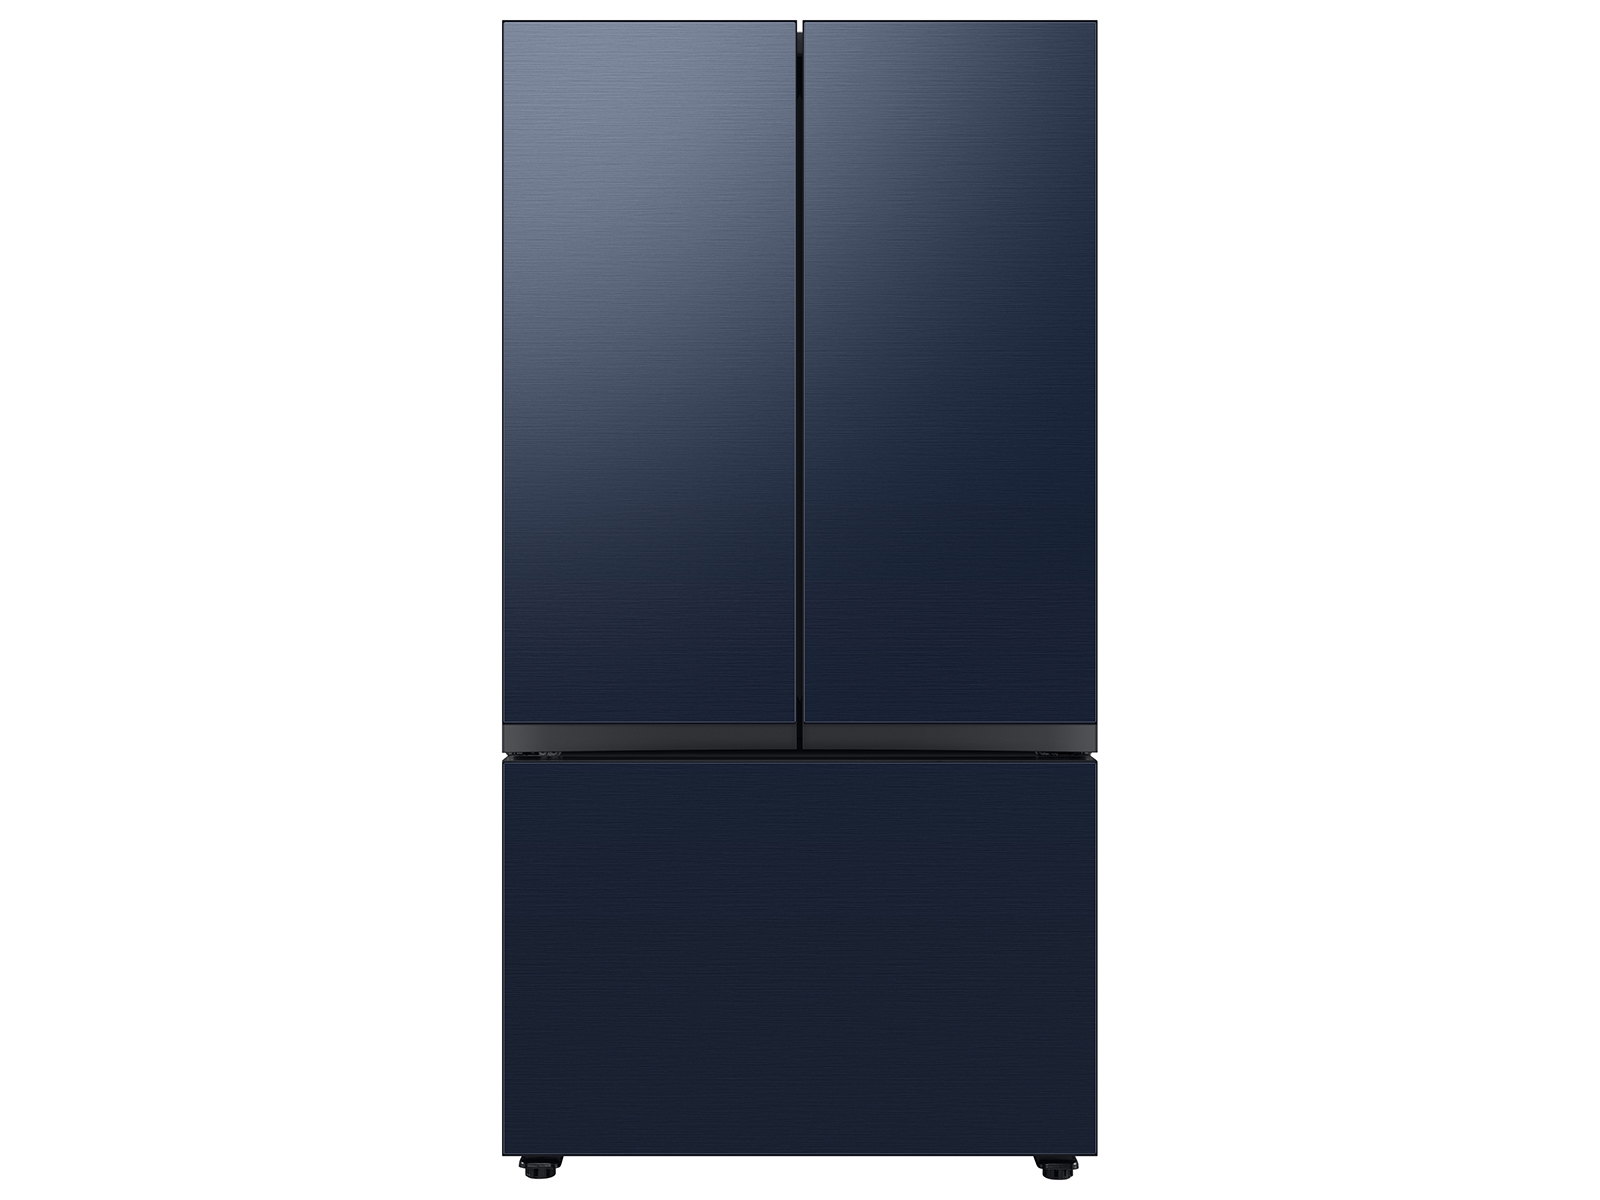 Samsung Bespoke 3-Door French Door Refrigerator in Navy Blue (24 cu. ft.) with AutoFill Water Pitcher in Navy Steel(BNDL-1650393961396)